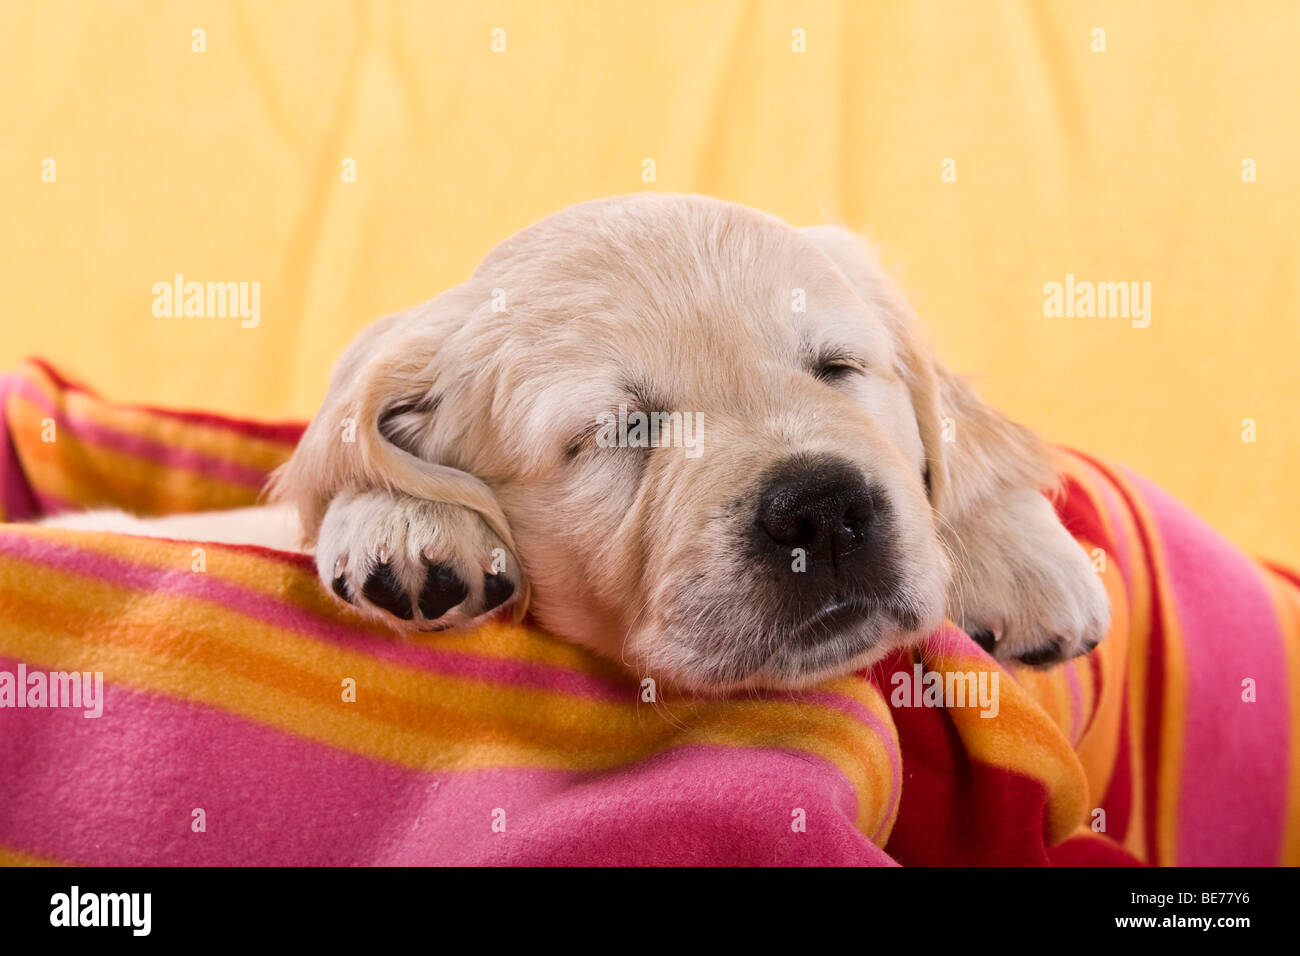 Golden Retriever puppy sleeping on a blanket Stock Photo